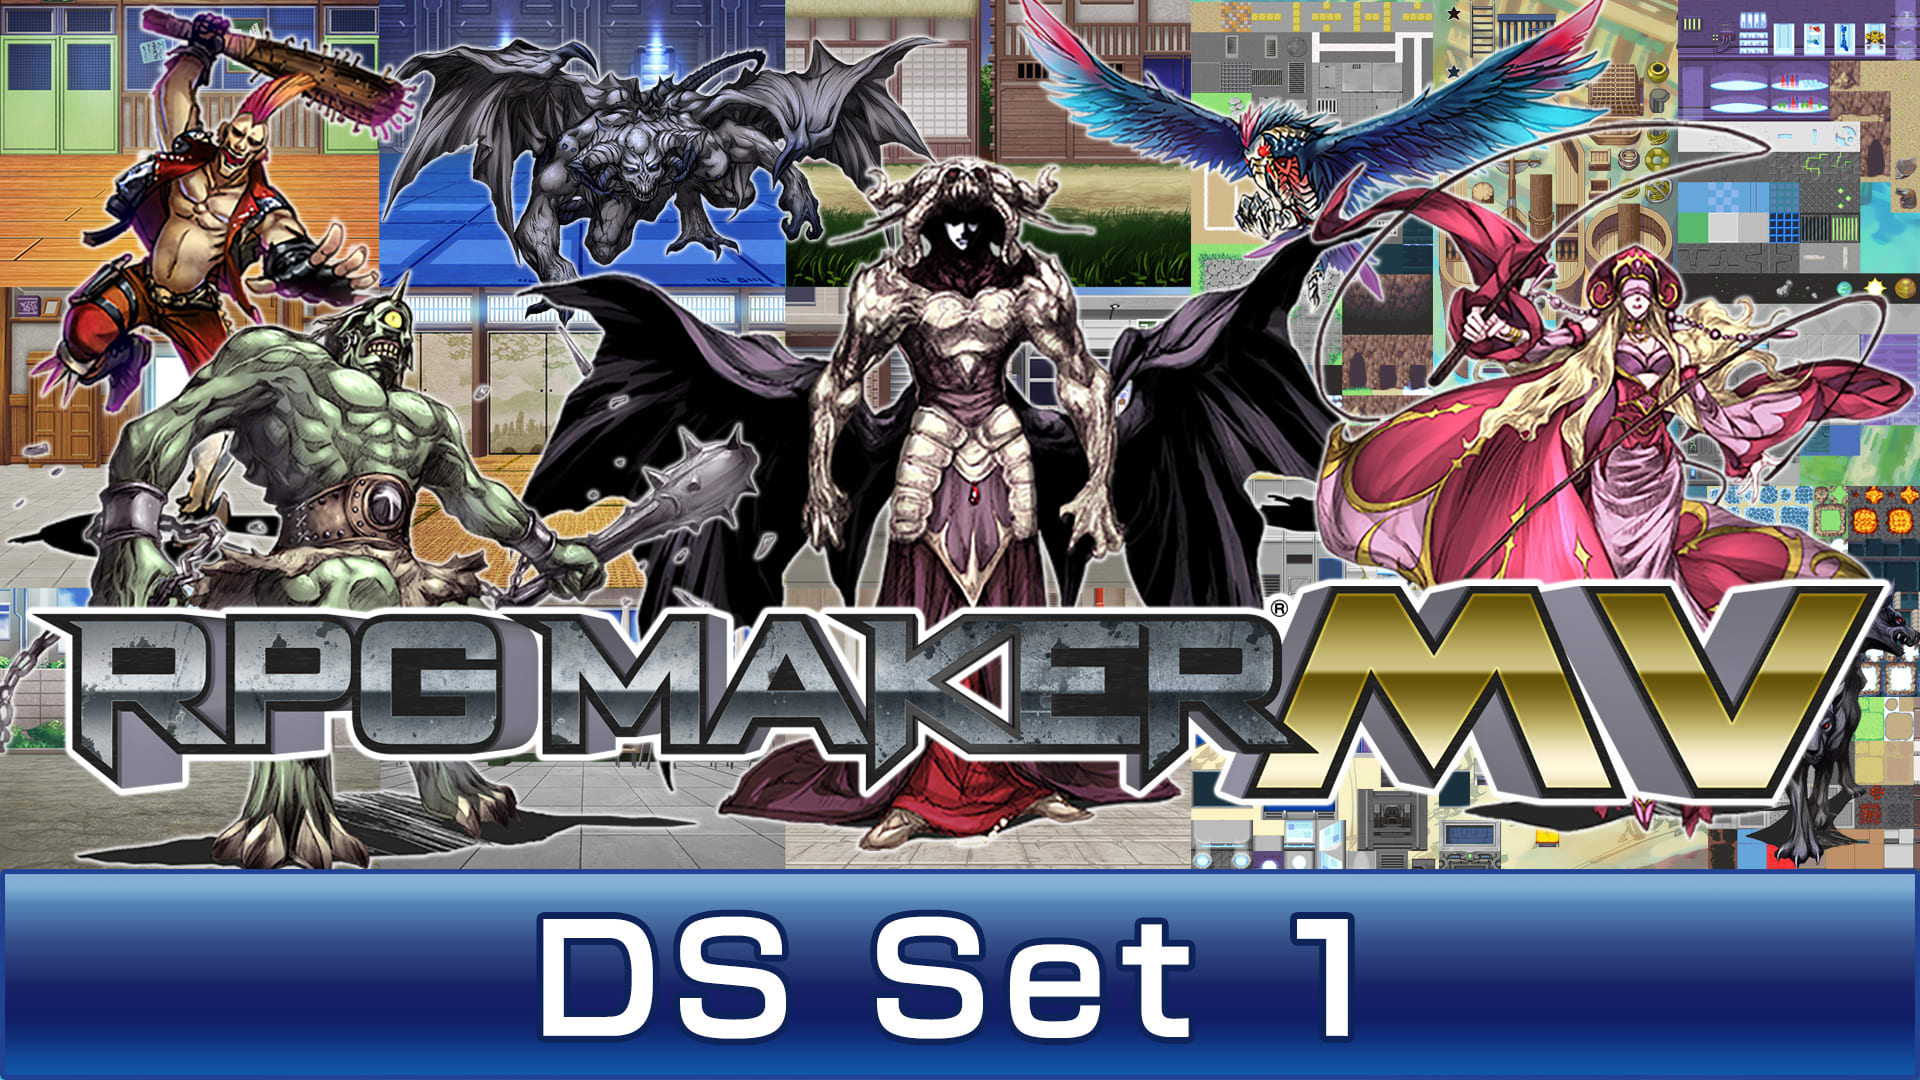 RPG Maker MV: DS Set 1